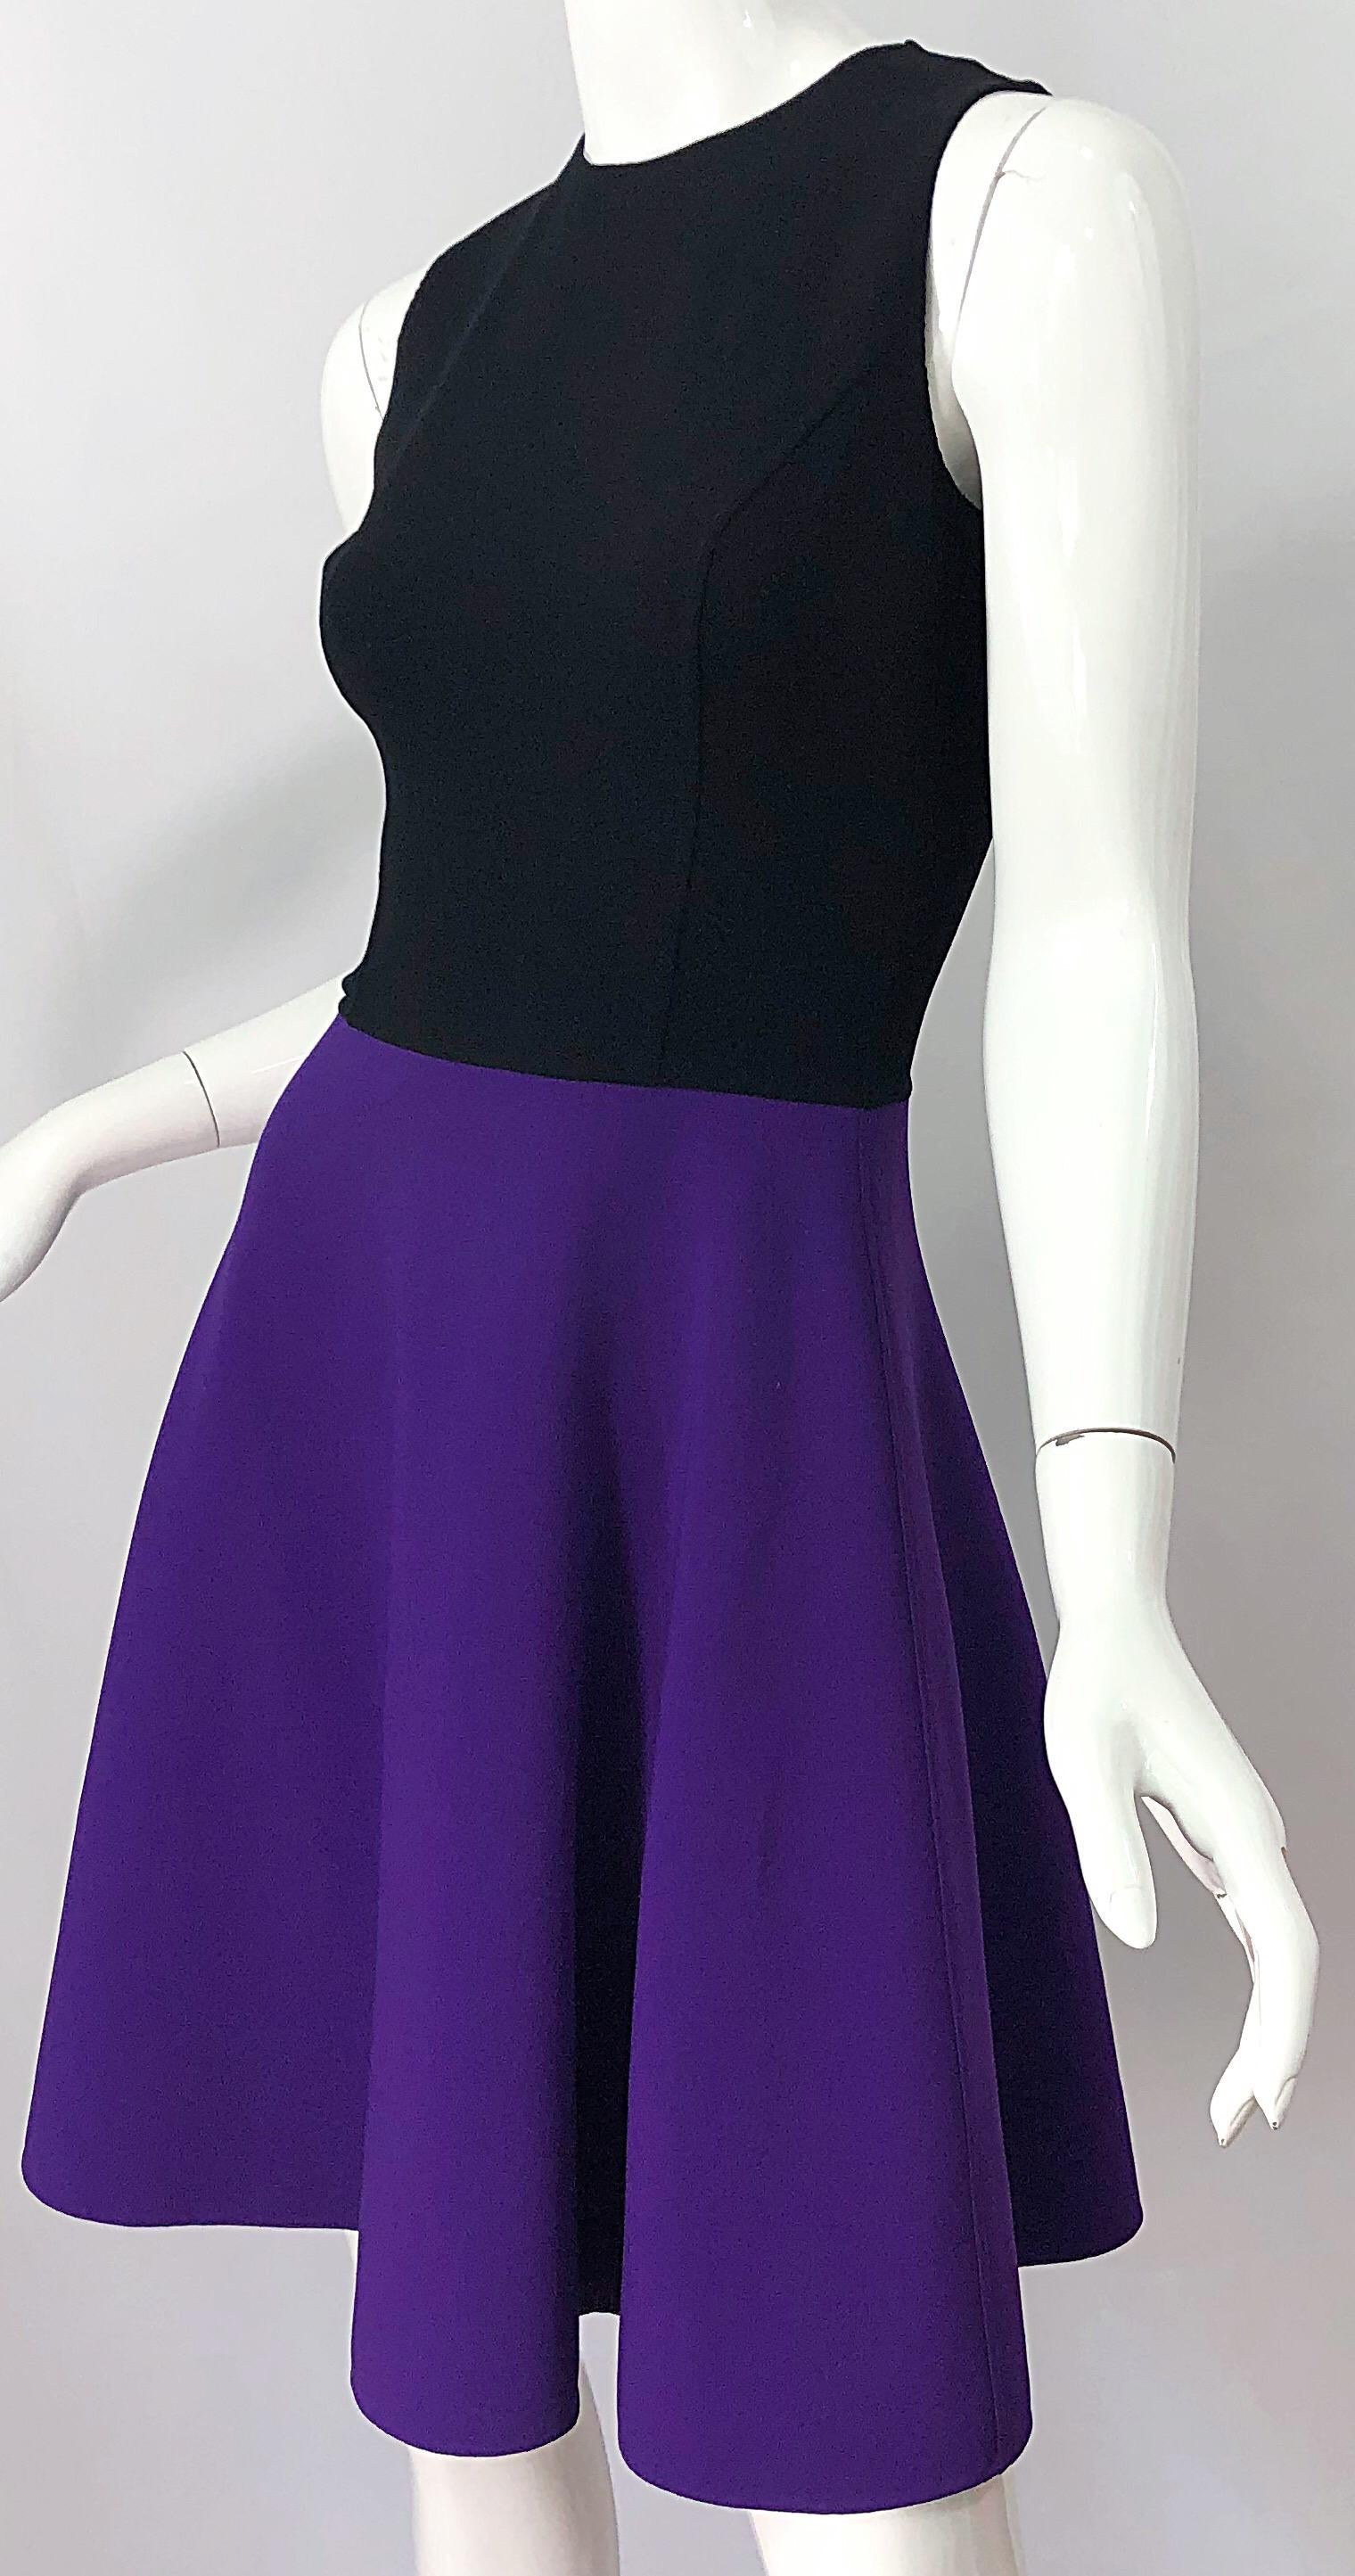 Women's or Men's Michael Kors Collection Size 2 / 4 Purple + Black Color Block Sleeveles Dress For Sale